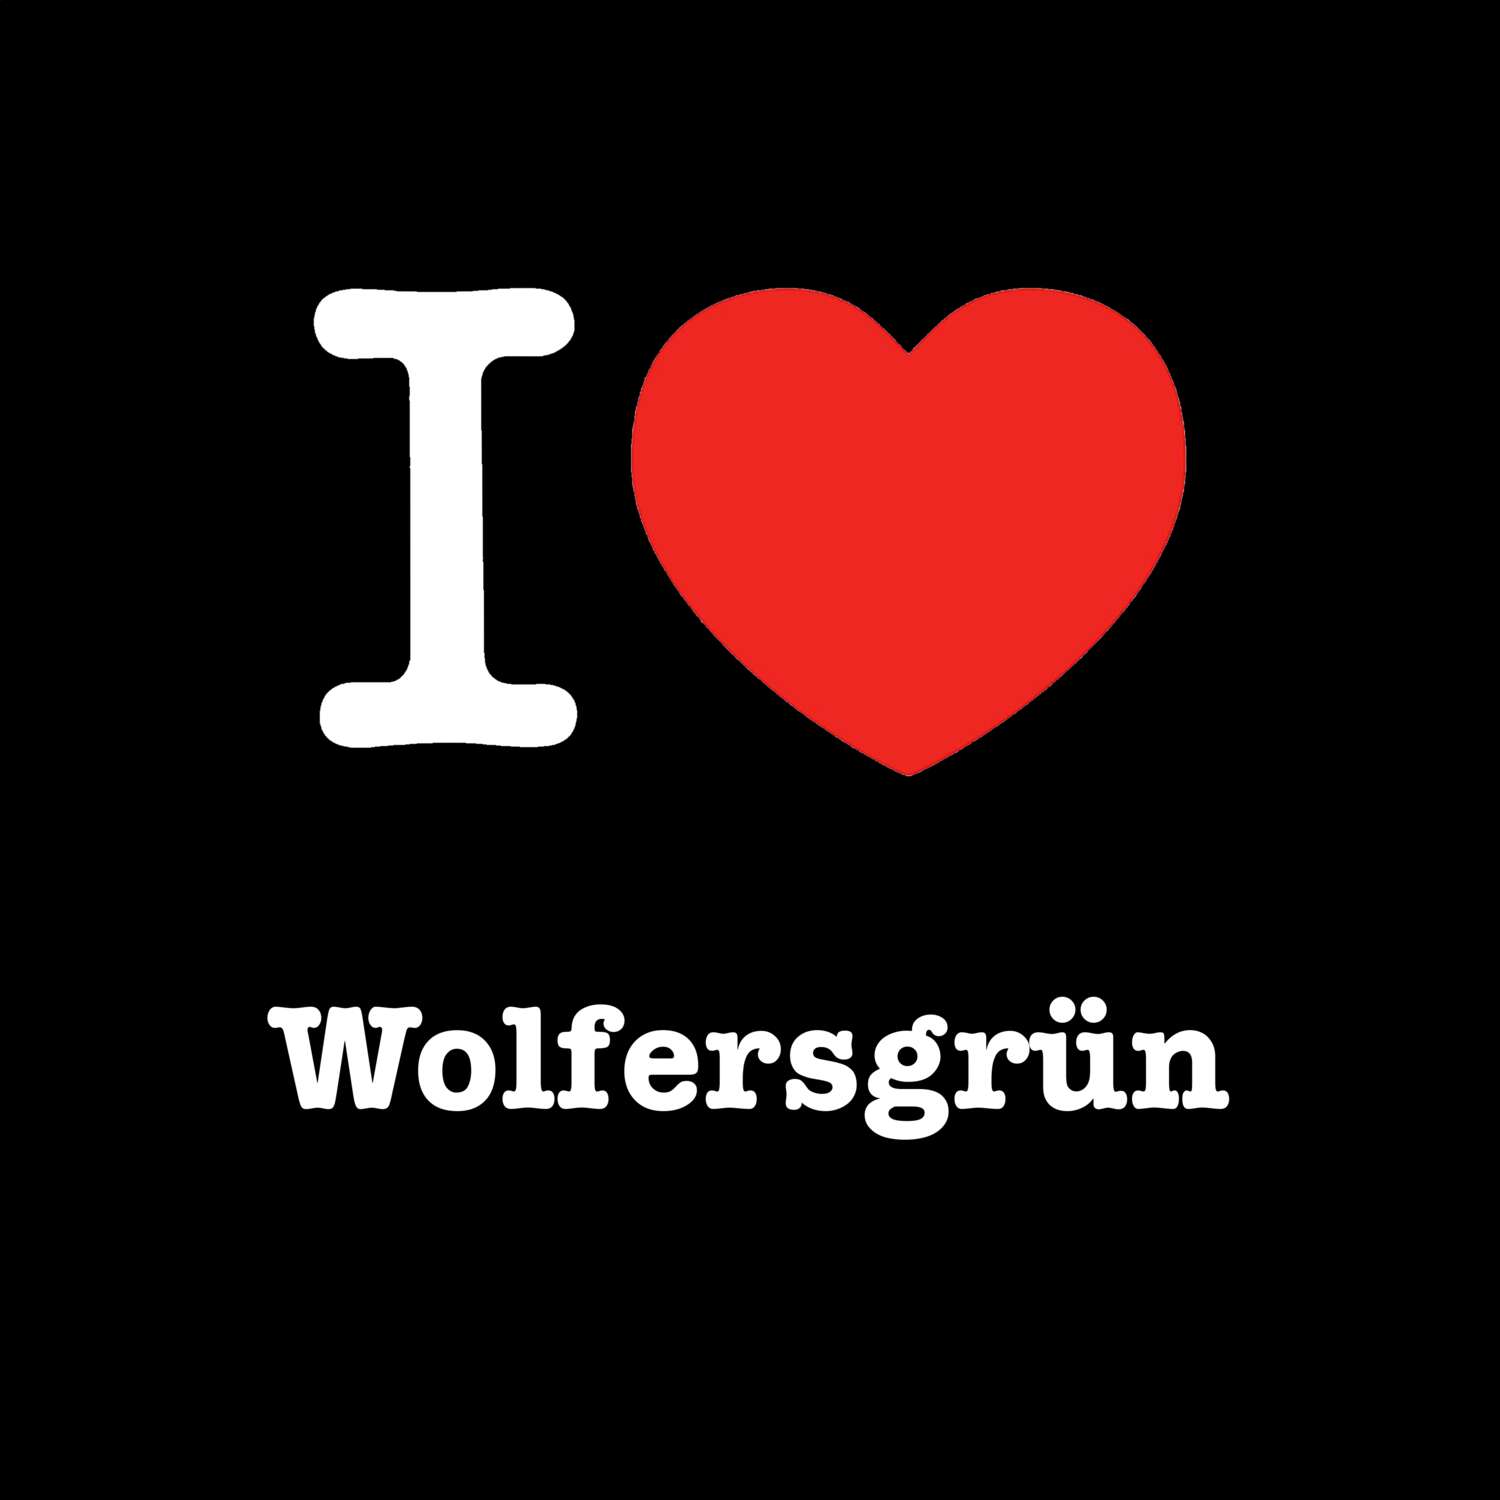 Wolfersgrün T-Shirt »I love«